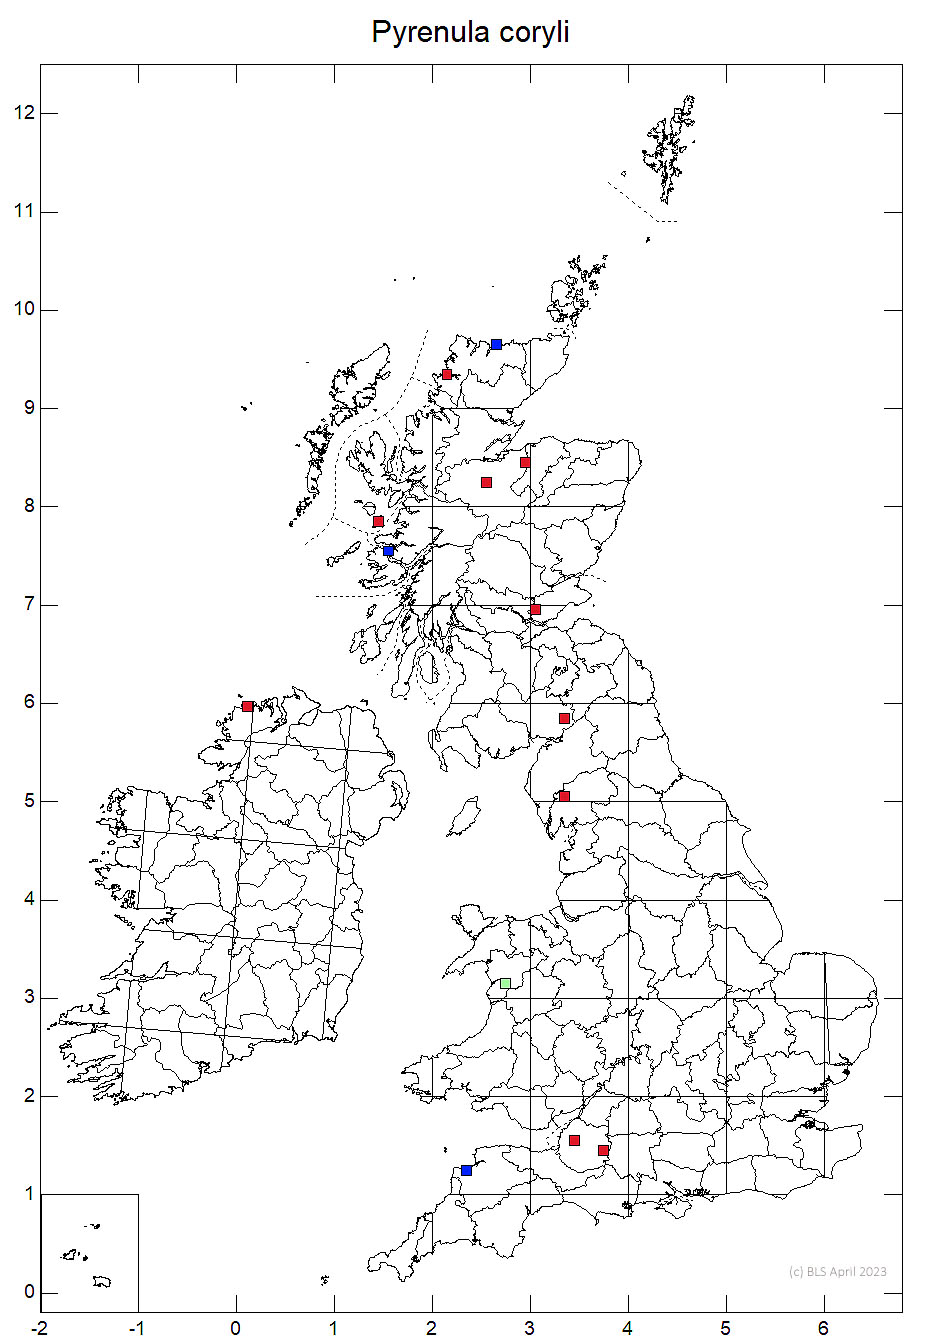 Pyrenula coryli 10km sq distribution map